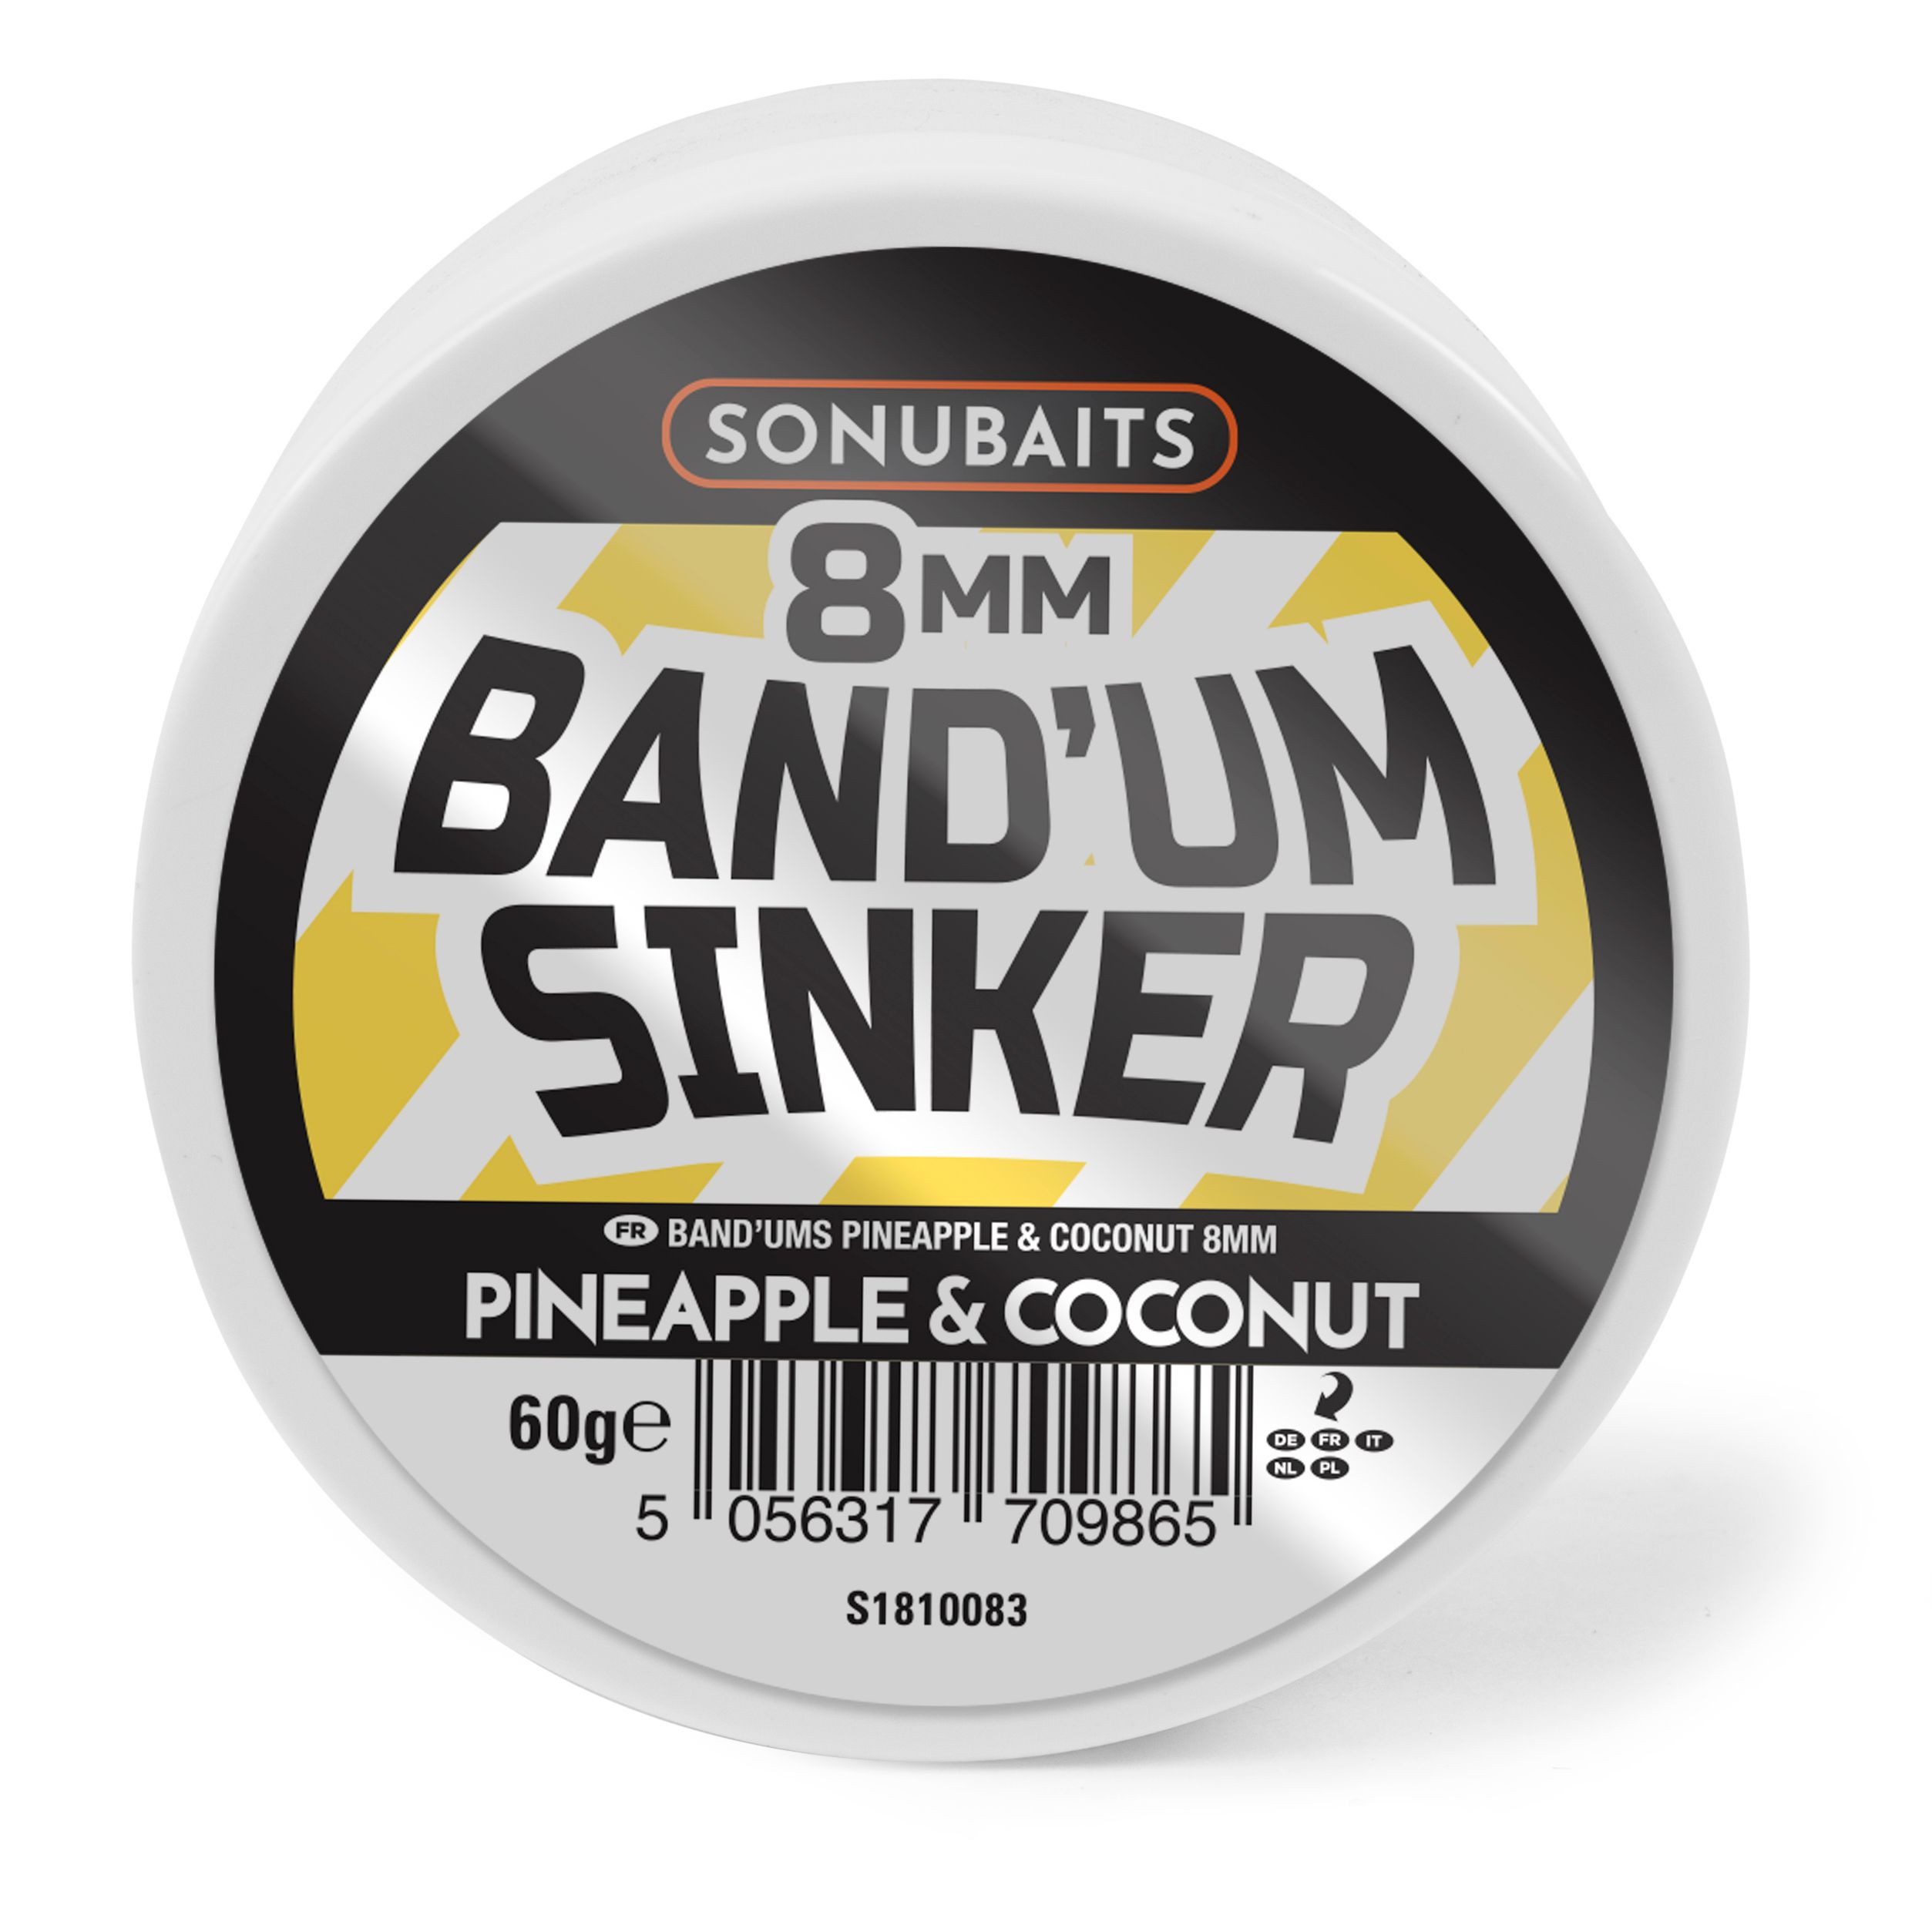 Sonubaits Band'um Sinker Boilies 8mm - Pineapple & Coconut